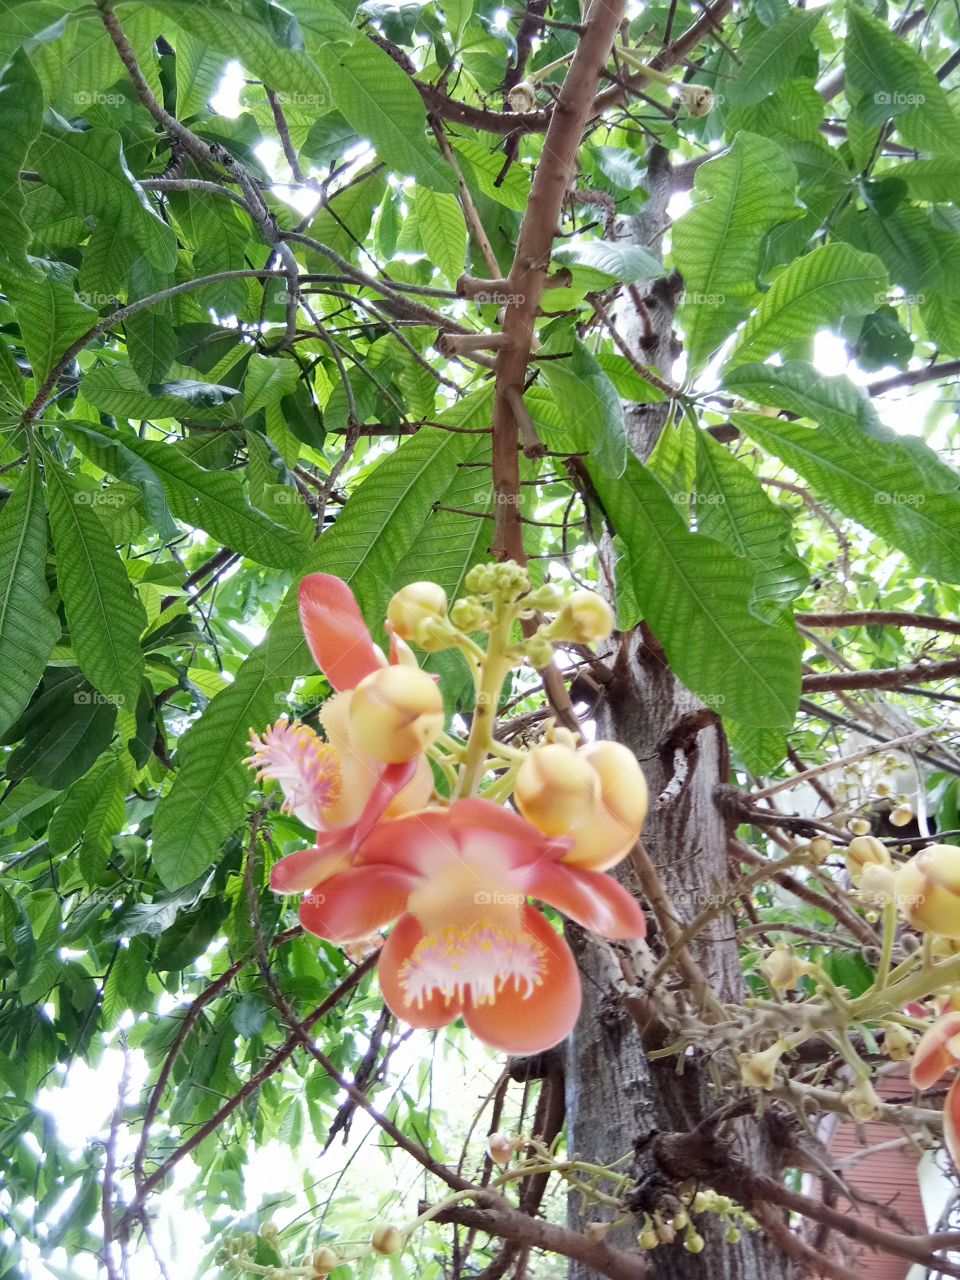 flower
sala tree
thailand